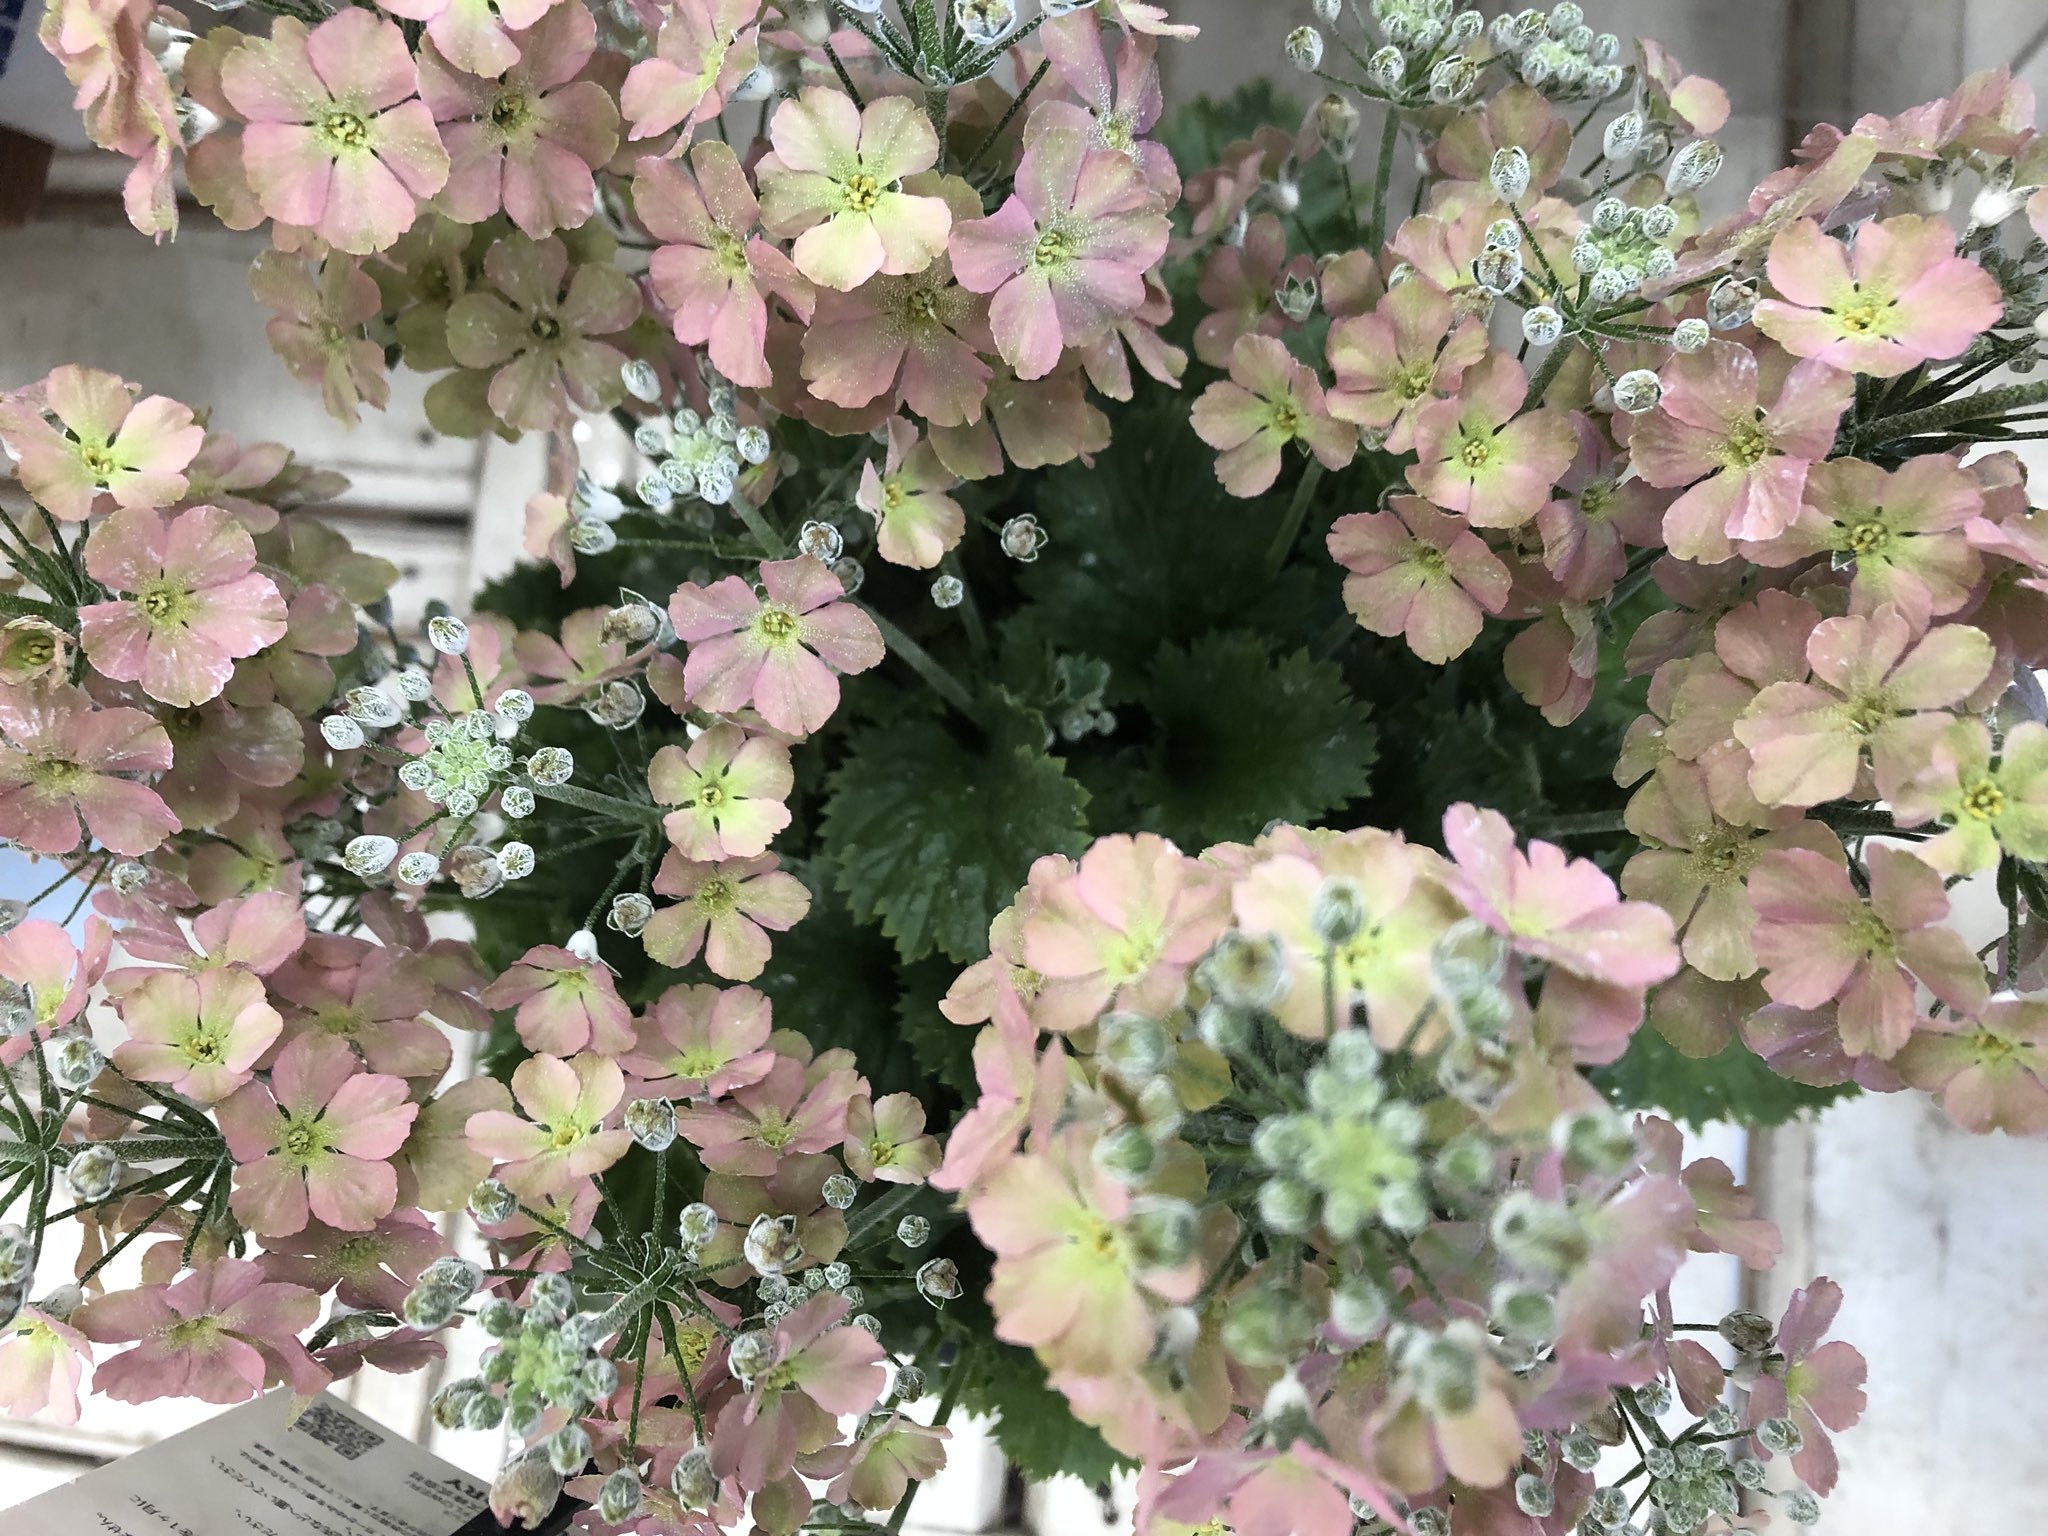 Nico 最近のお気に入り Winty ウィンティー サクラソウ プリムラ マラコイデス カラーはライムグリーン サクラ ピーチ 写真はピーチ アンティークな色調と柔らかなグラデーション 名前も可愛いけどとにかく花が可愛いくて優しい花色に和む 花言葉は